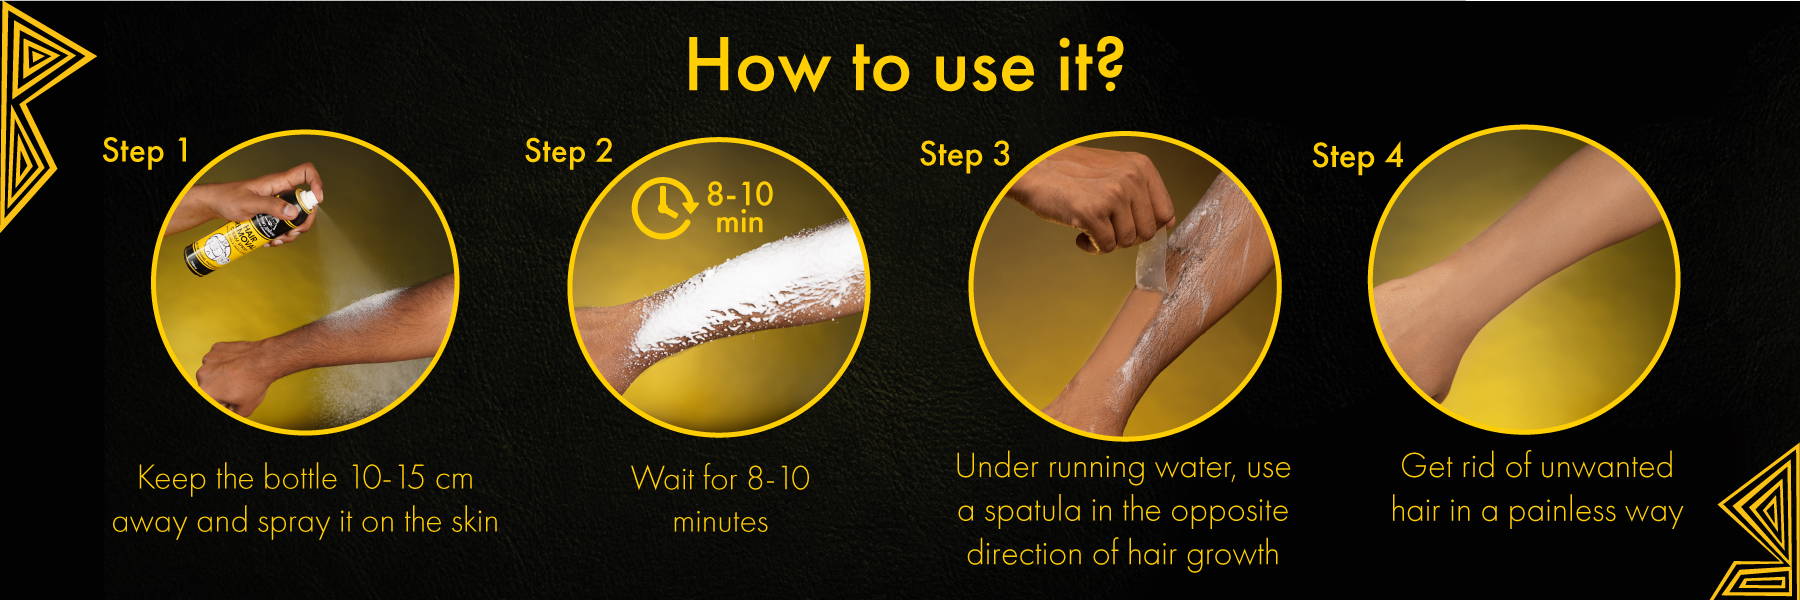 how to use hair removal spray - urbangabru